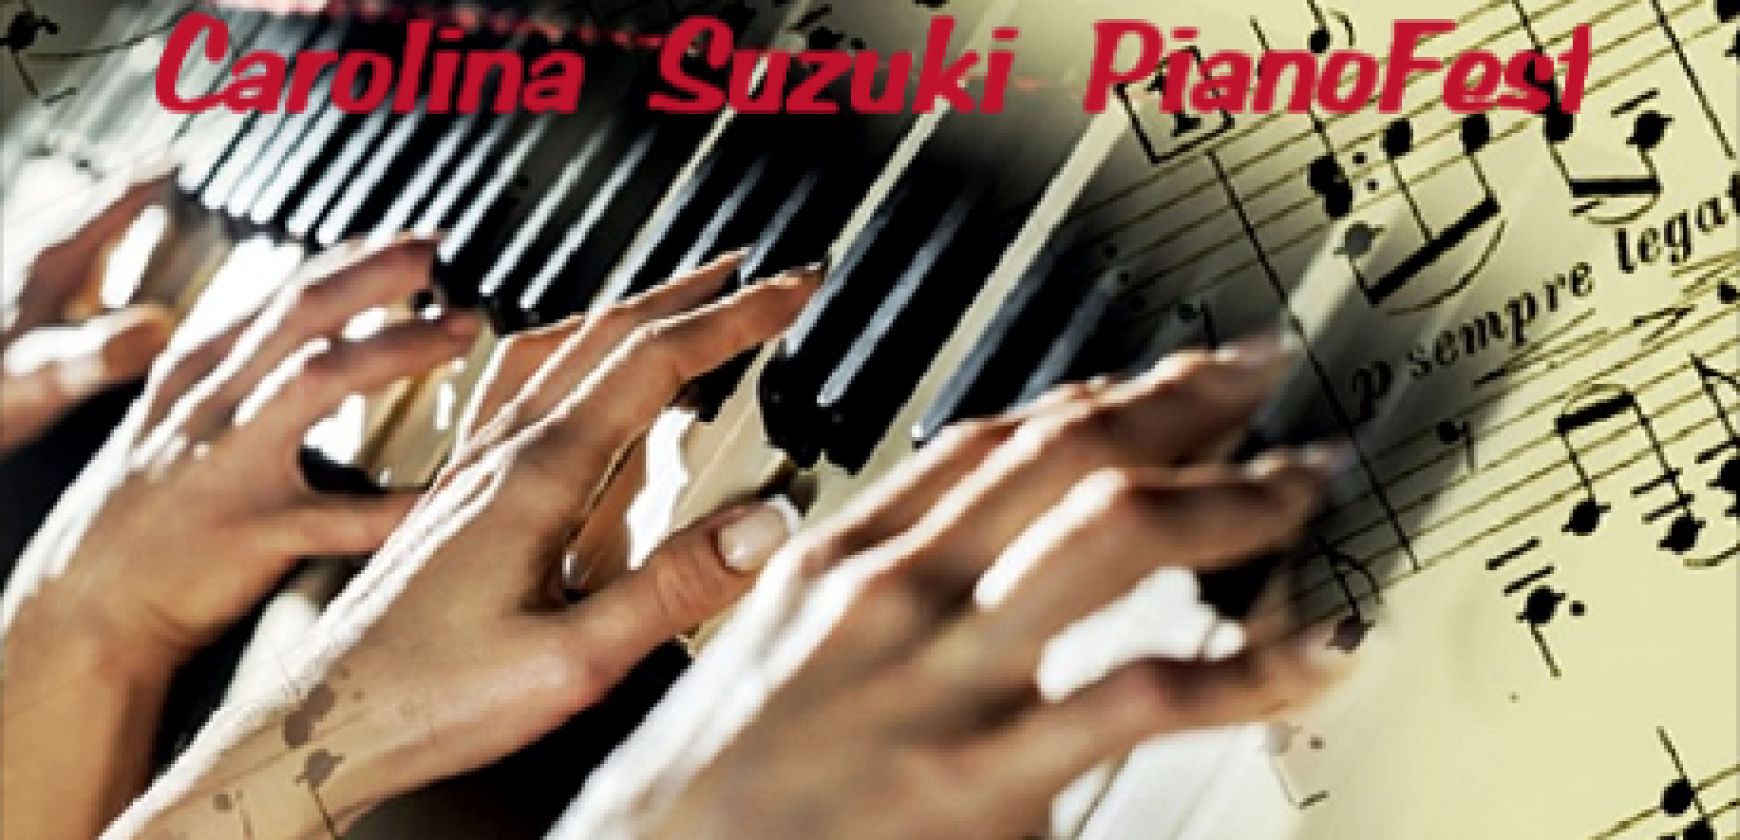 Carolina Suzuki PianoFest